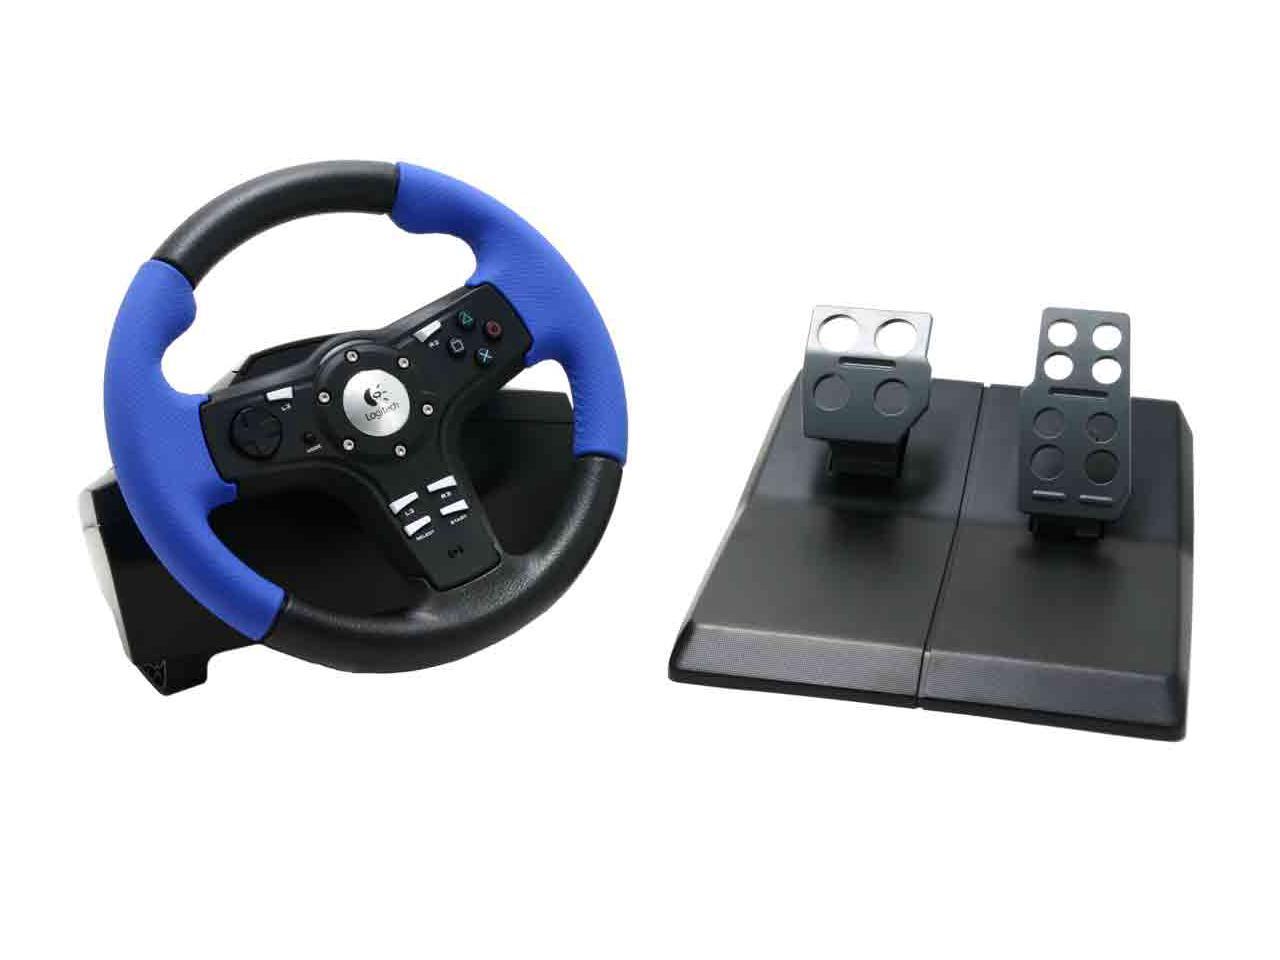 Logitech Driving EX Wheel - Newegg.com